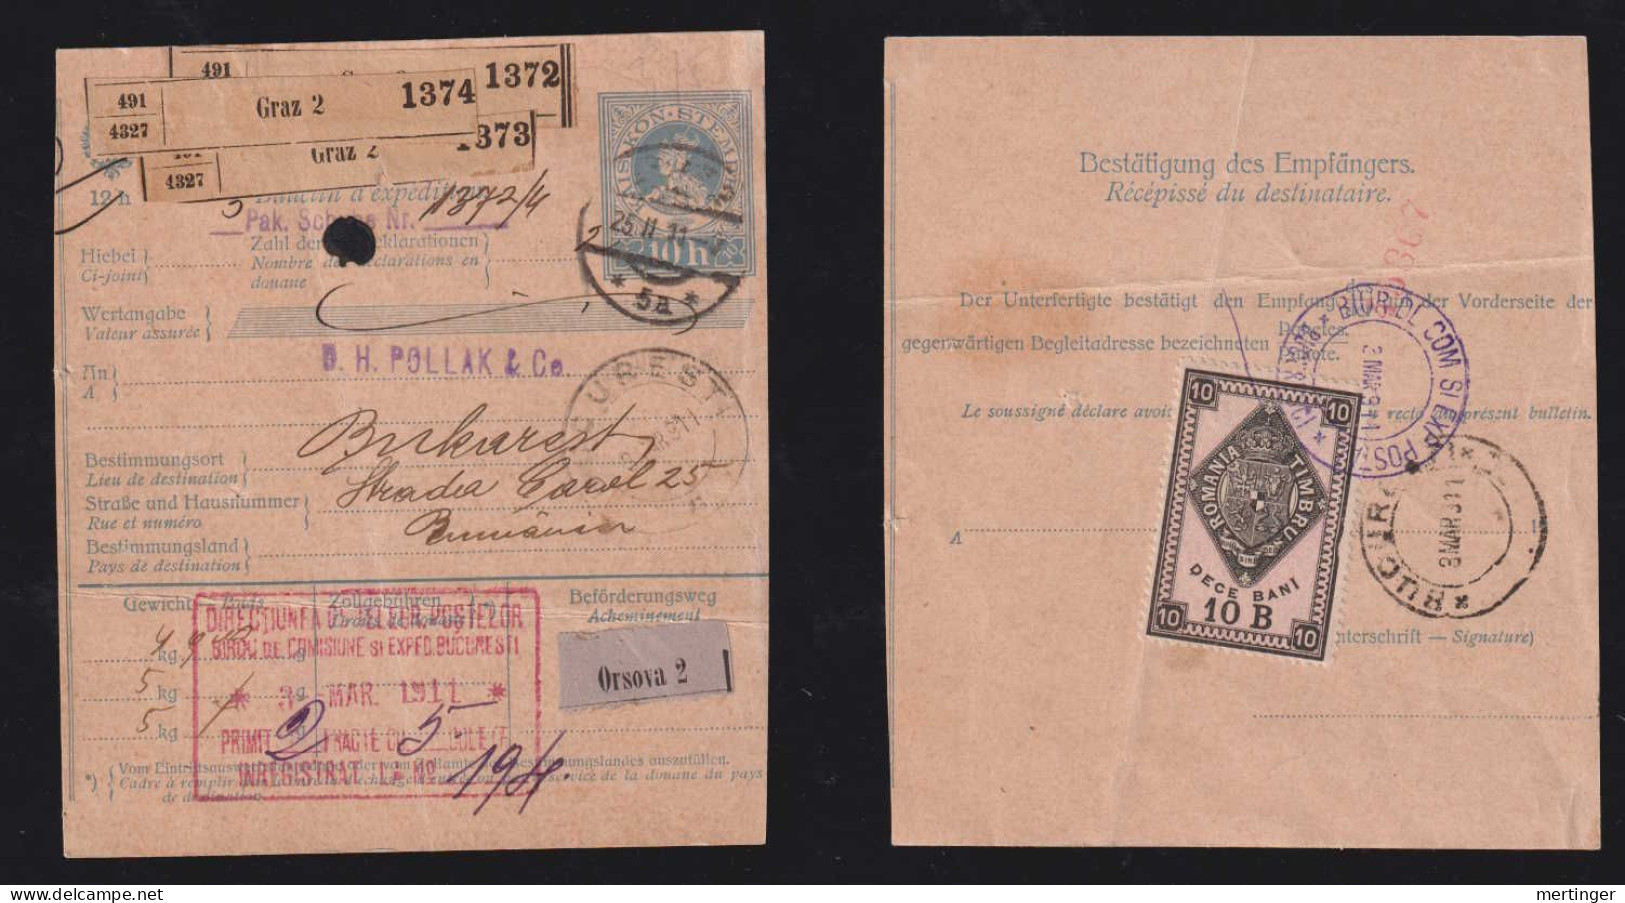 Rumänien Romania 1911 Parcle Card GRAZ Austria X BUCURESTI With Revenue Stamp - Covers & Documents